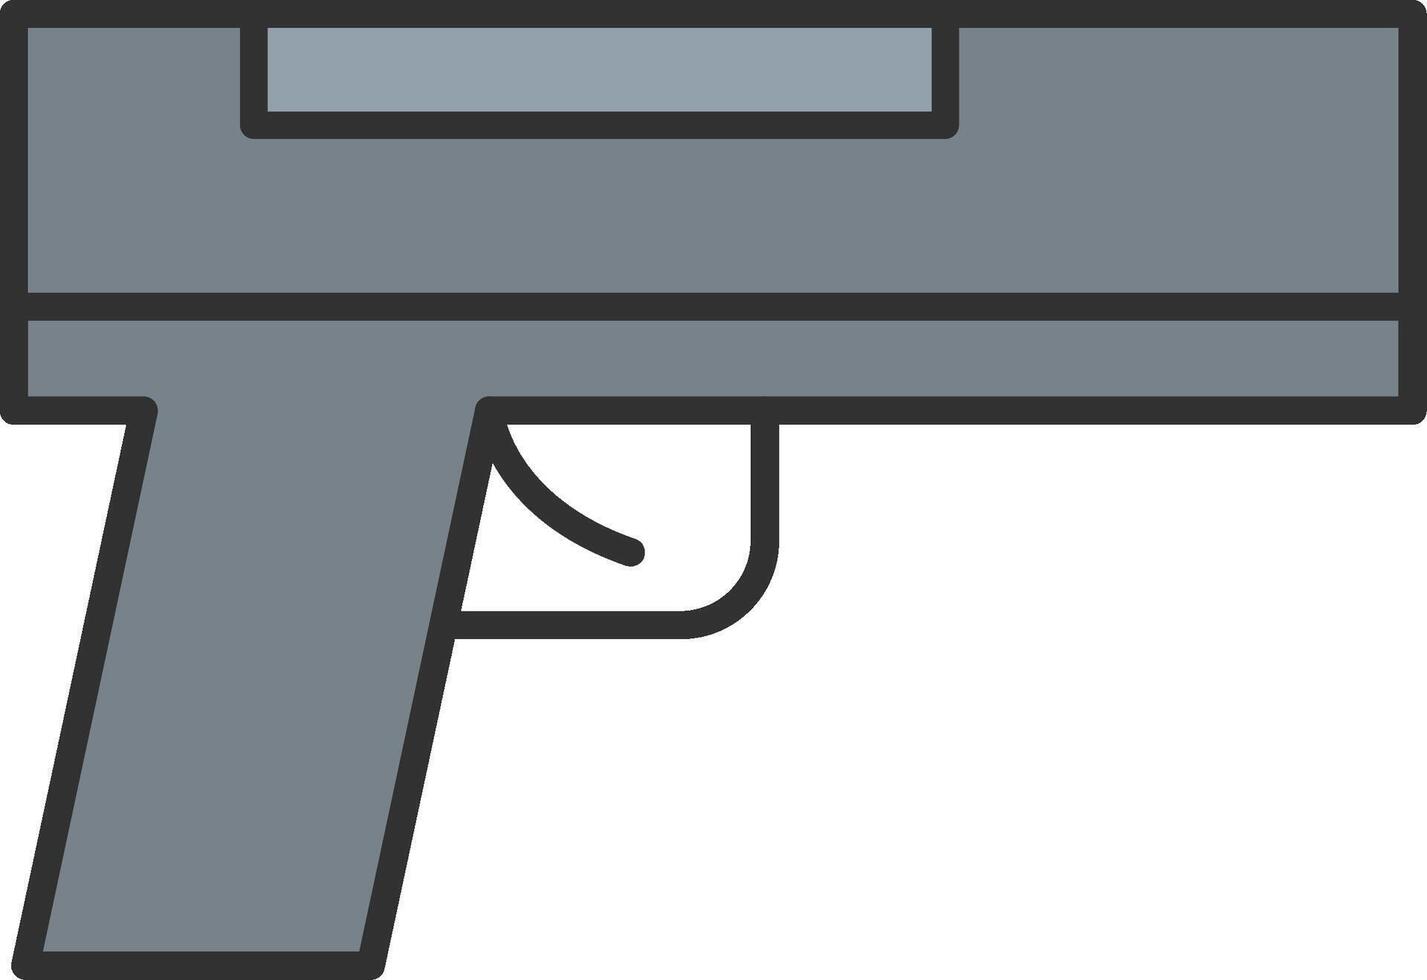 Gun Line Filled Light Icon vector